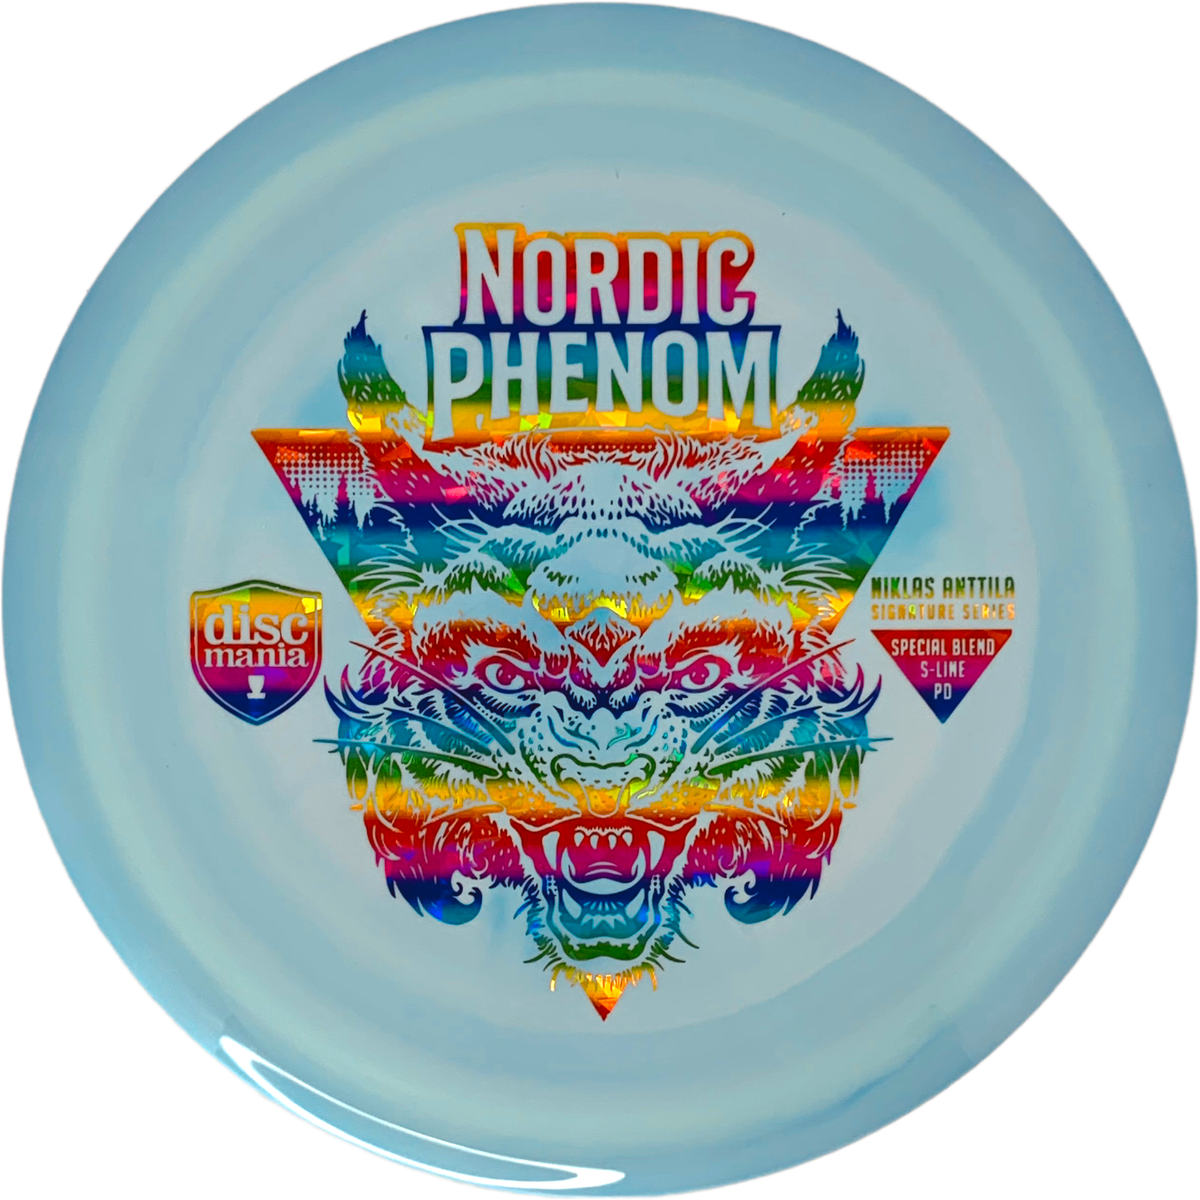 Discmania Special Blend S-Line PD - Nordic Phenom